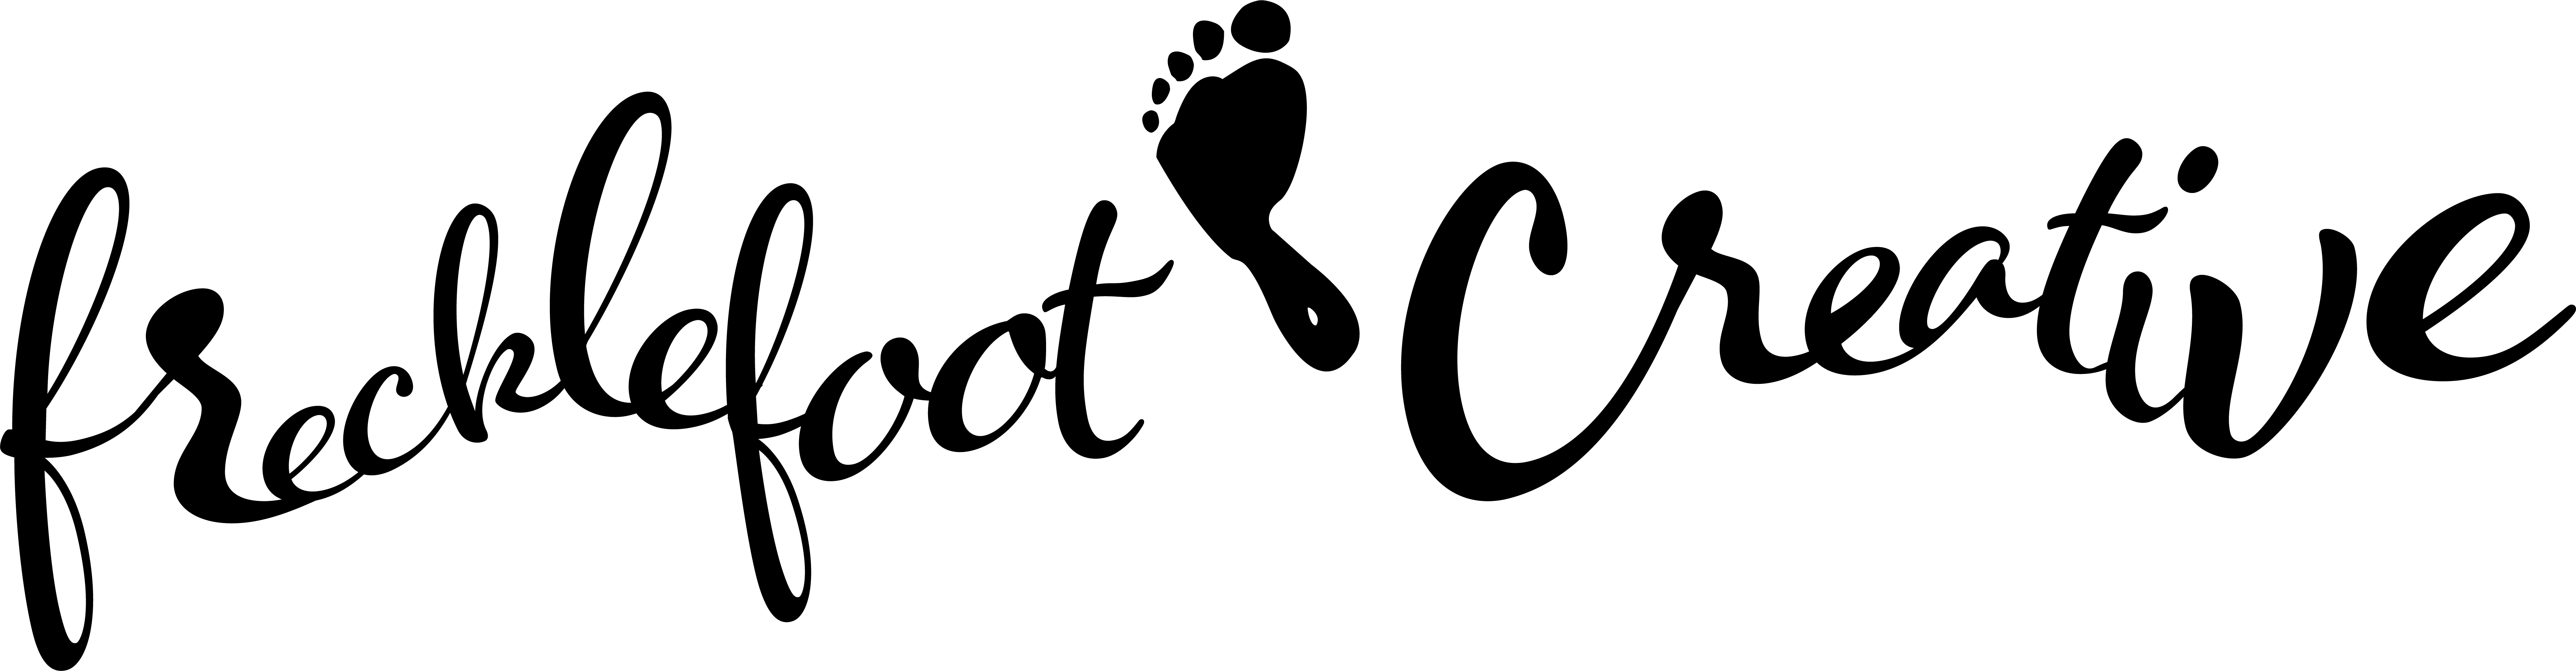 Frecklefoot Creative's Logo